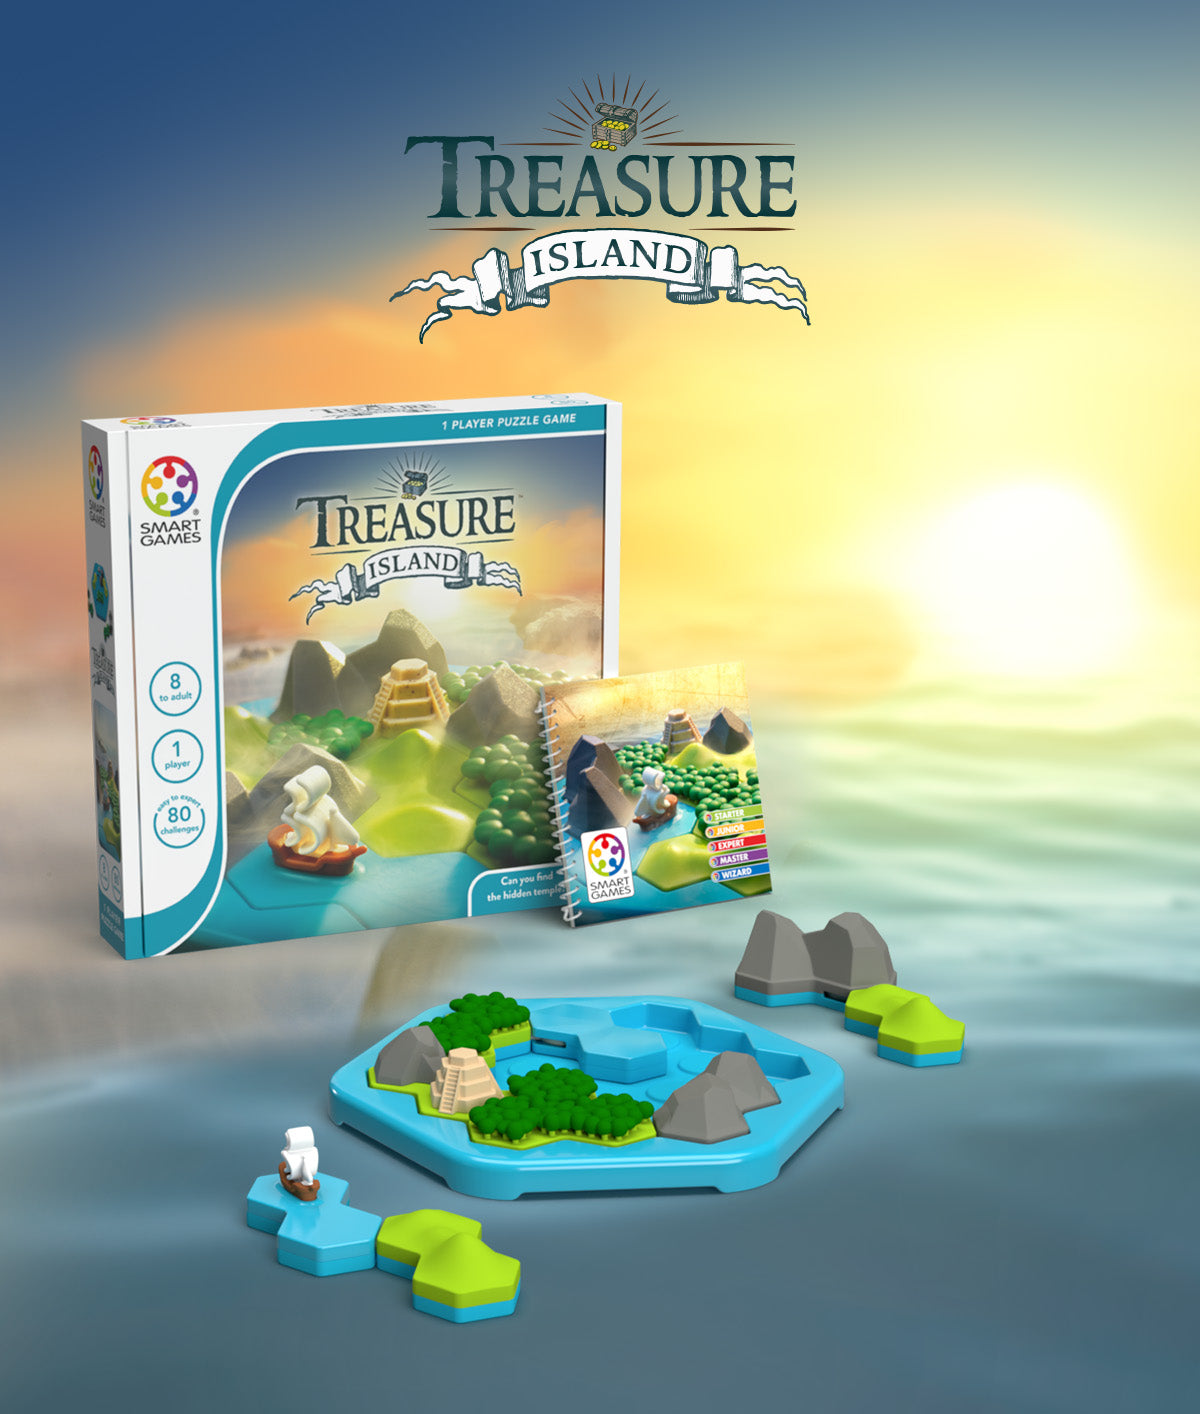 Treasure Island (1 Player Puzzle Game)